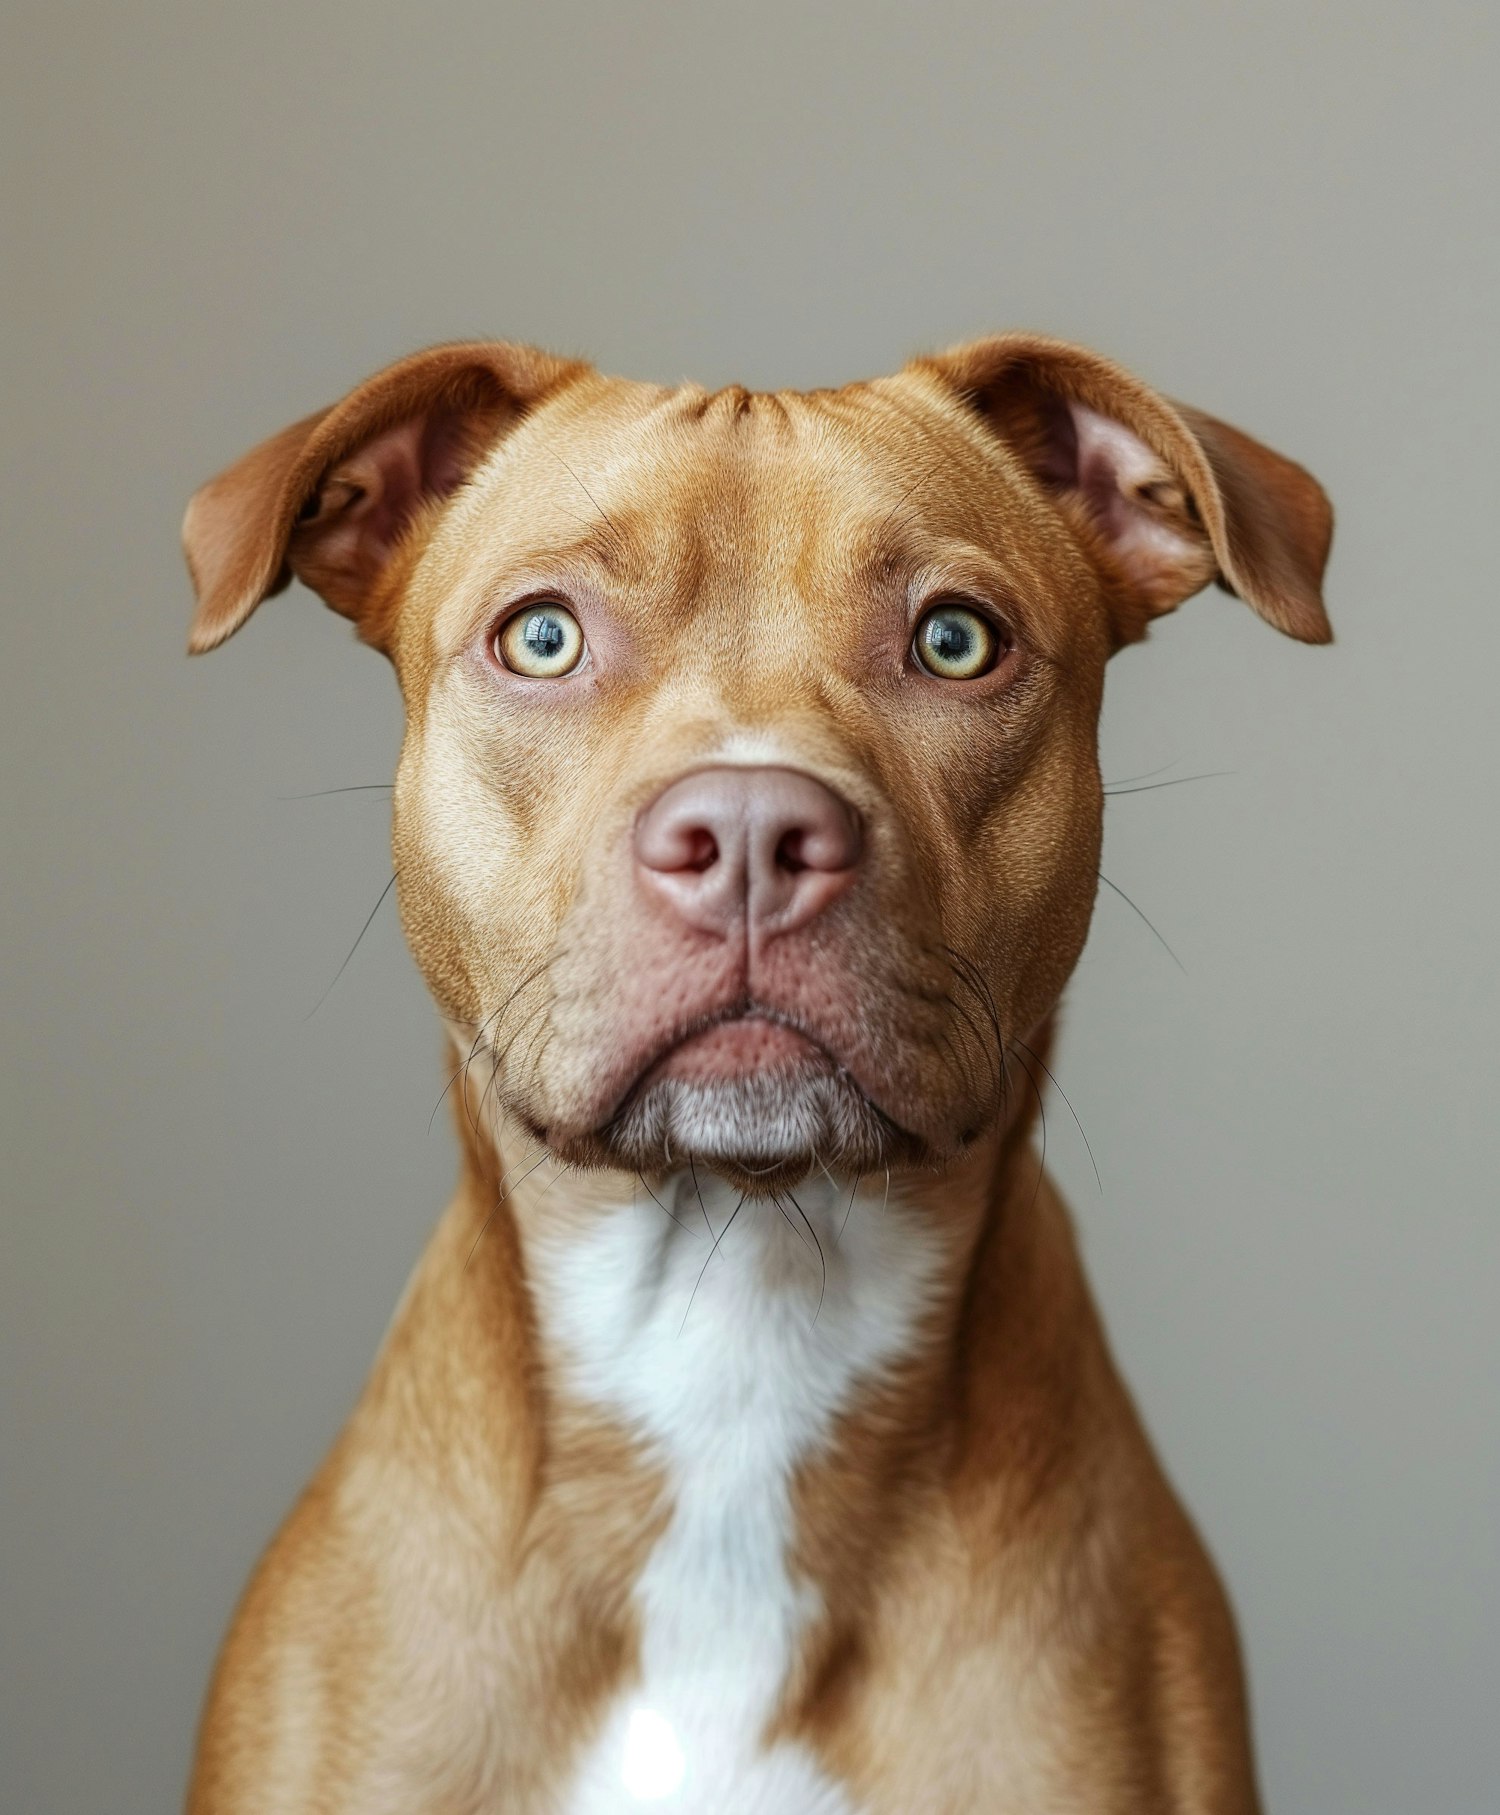 Expressive Copper-Toned Dog